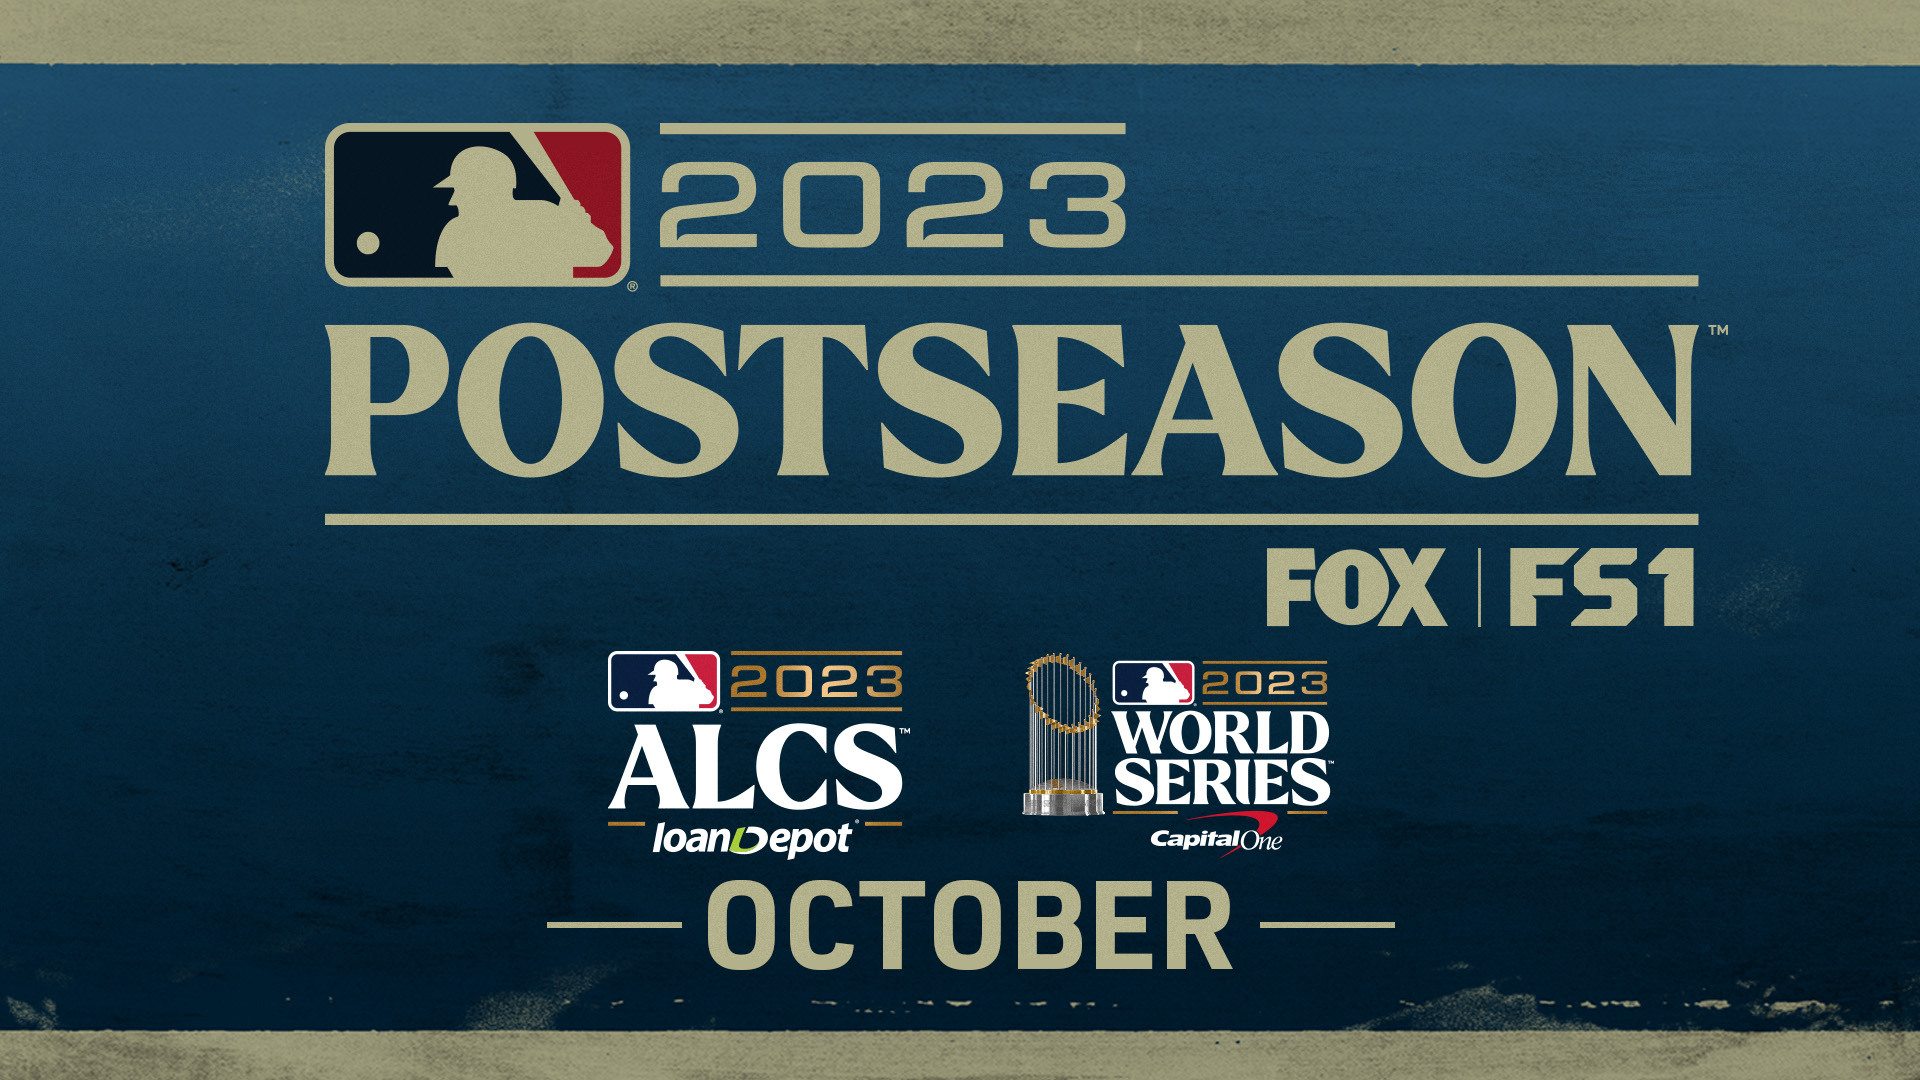 2019 MLB postseason schedule